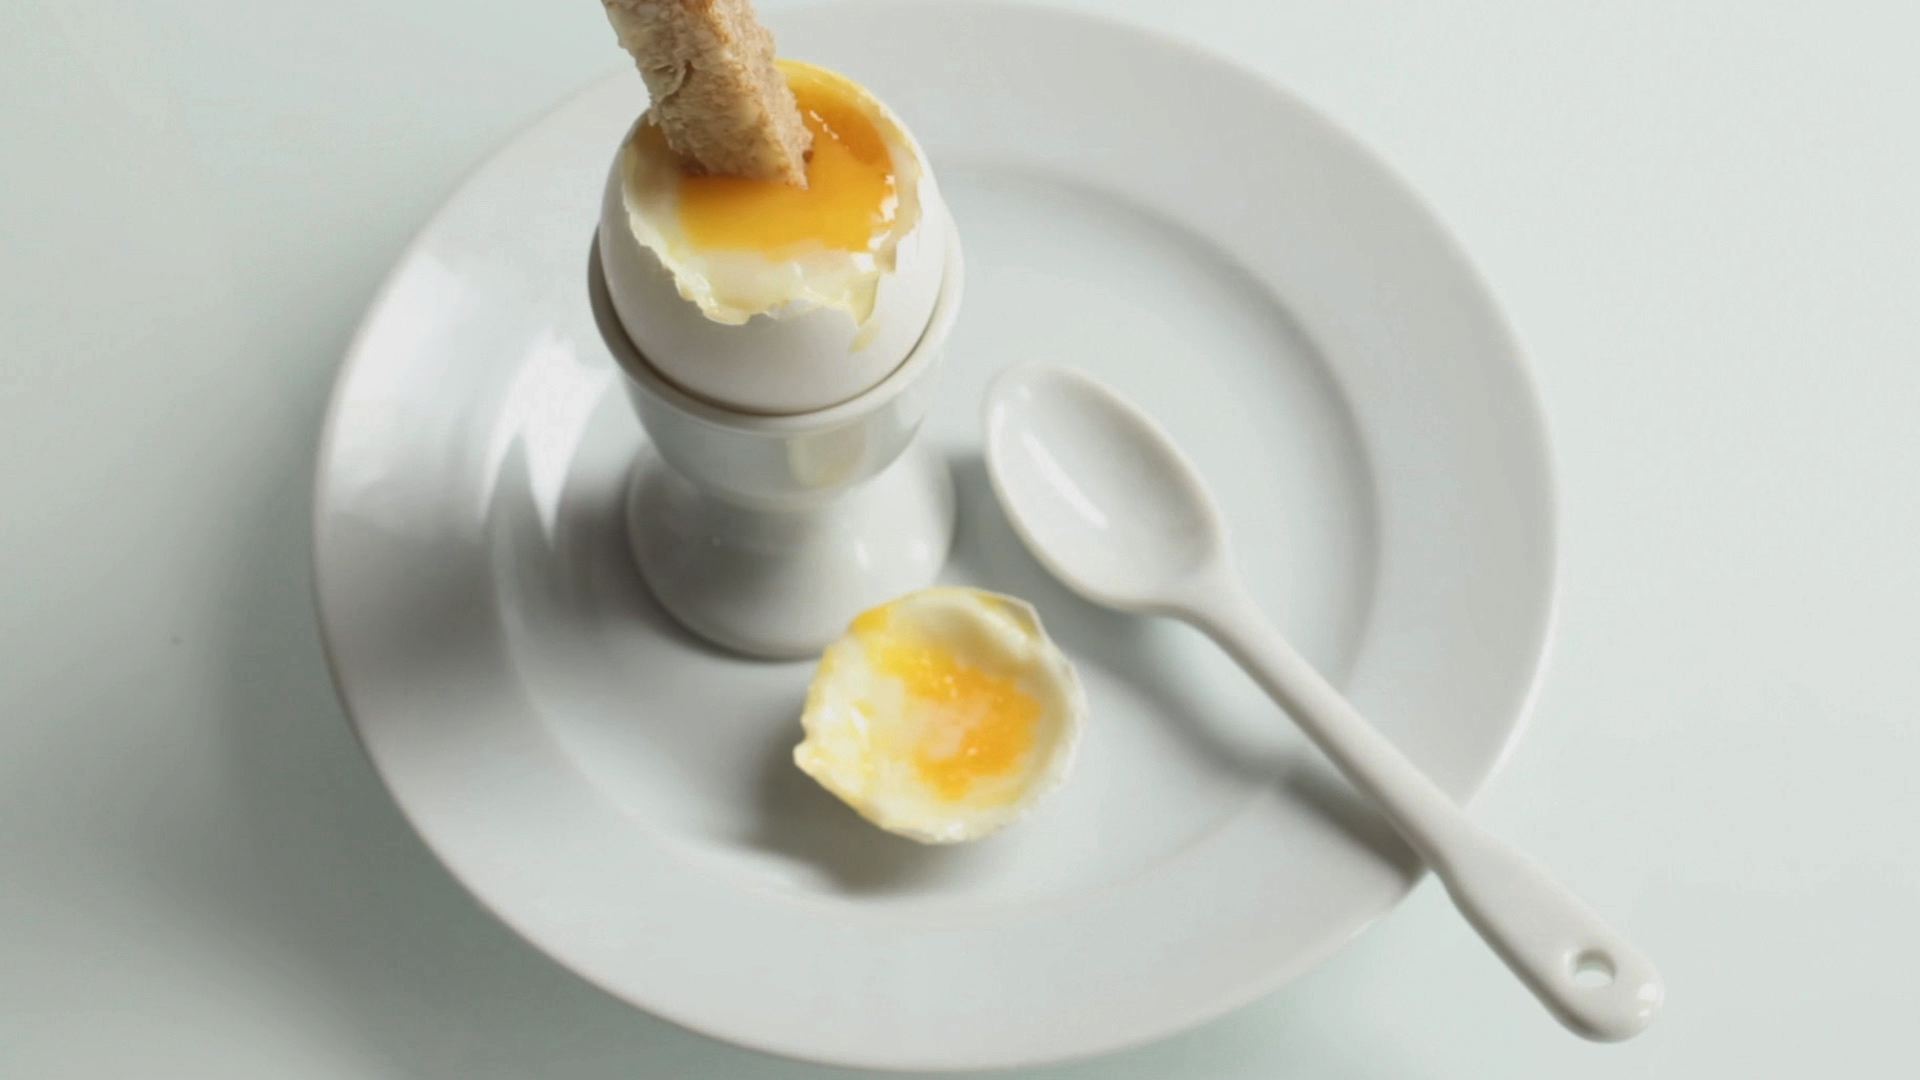 https://www.deliaonline.com/sites/default/files/quick_media/cs-soft-boiled-eggs.jpg